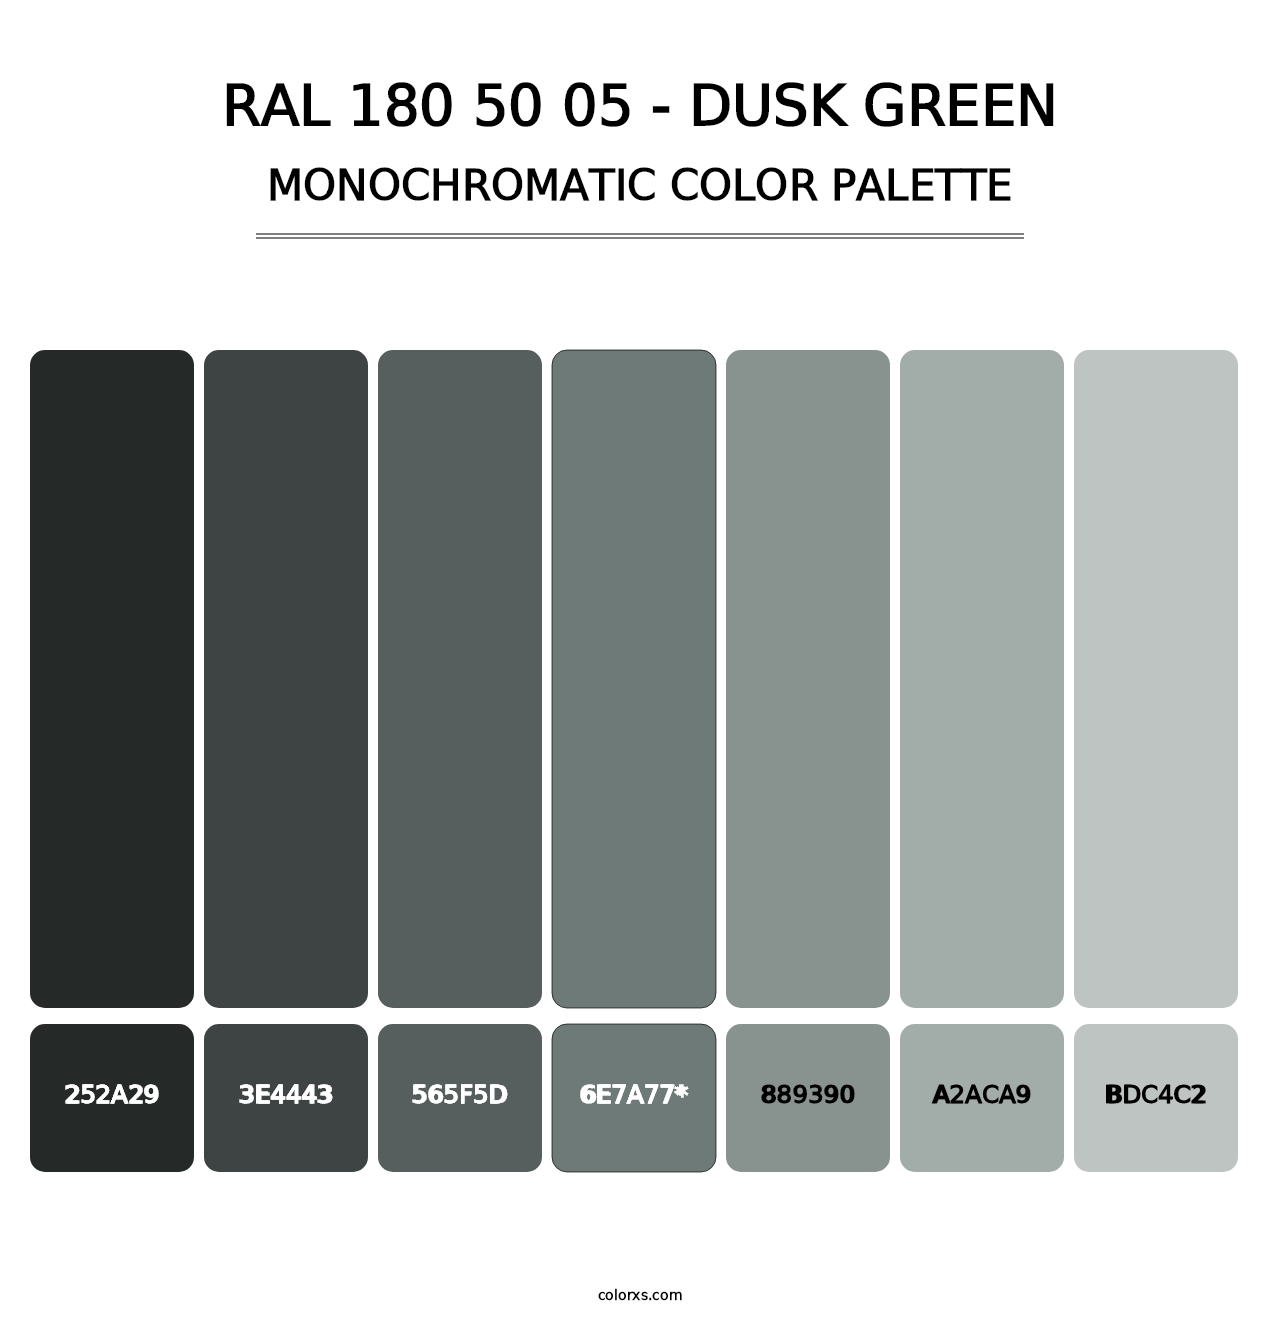 RAL 180 50 05 - Dusk Green - Monochromatic Color Palette